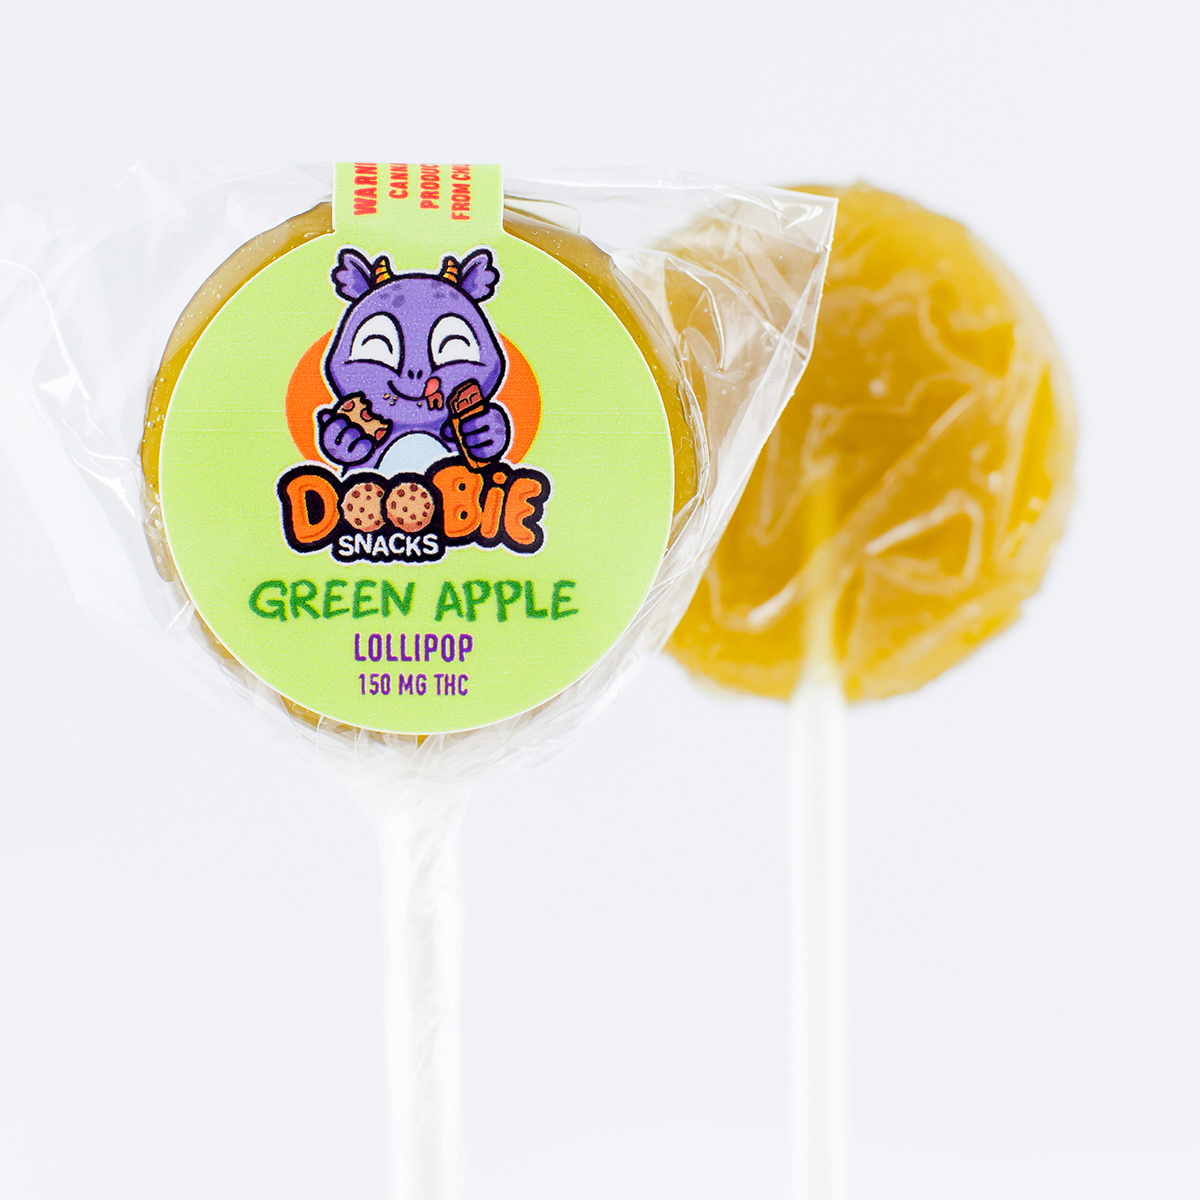 Green Apple Lollipops 150MG THC by Doobie Snacks